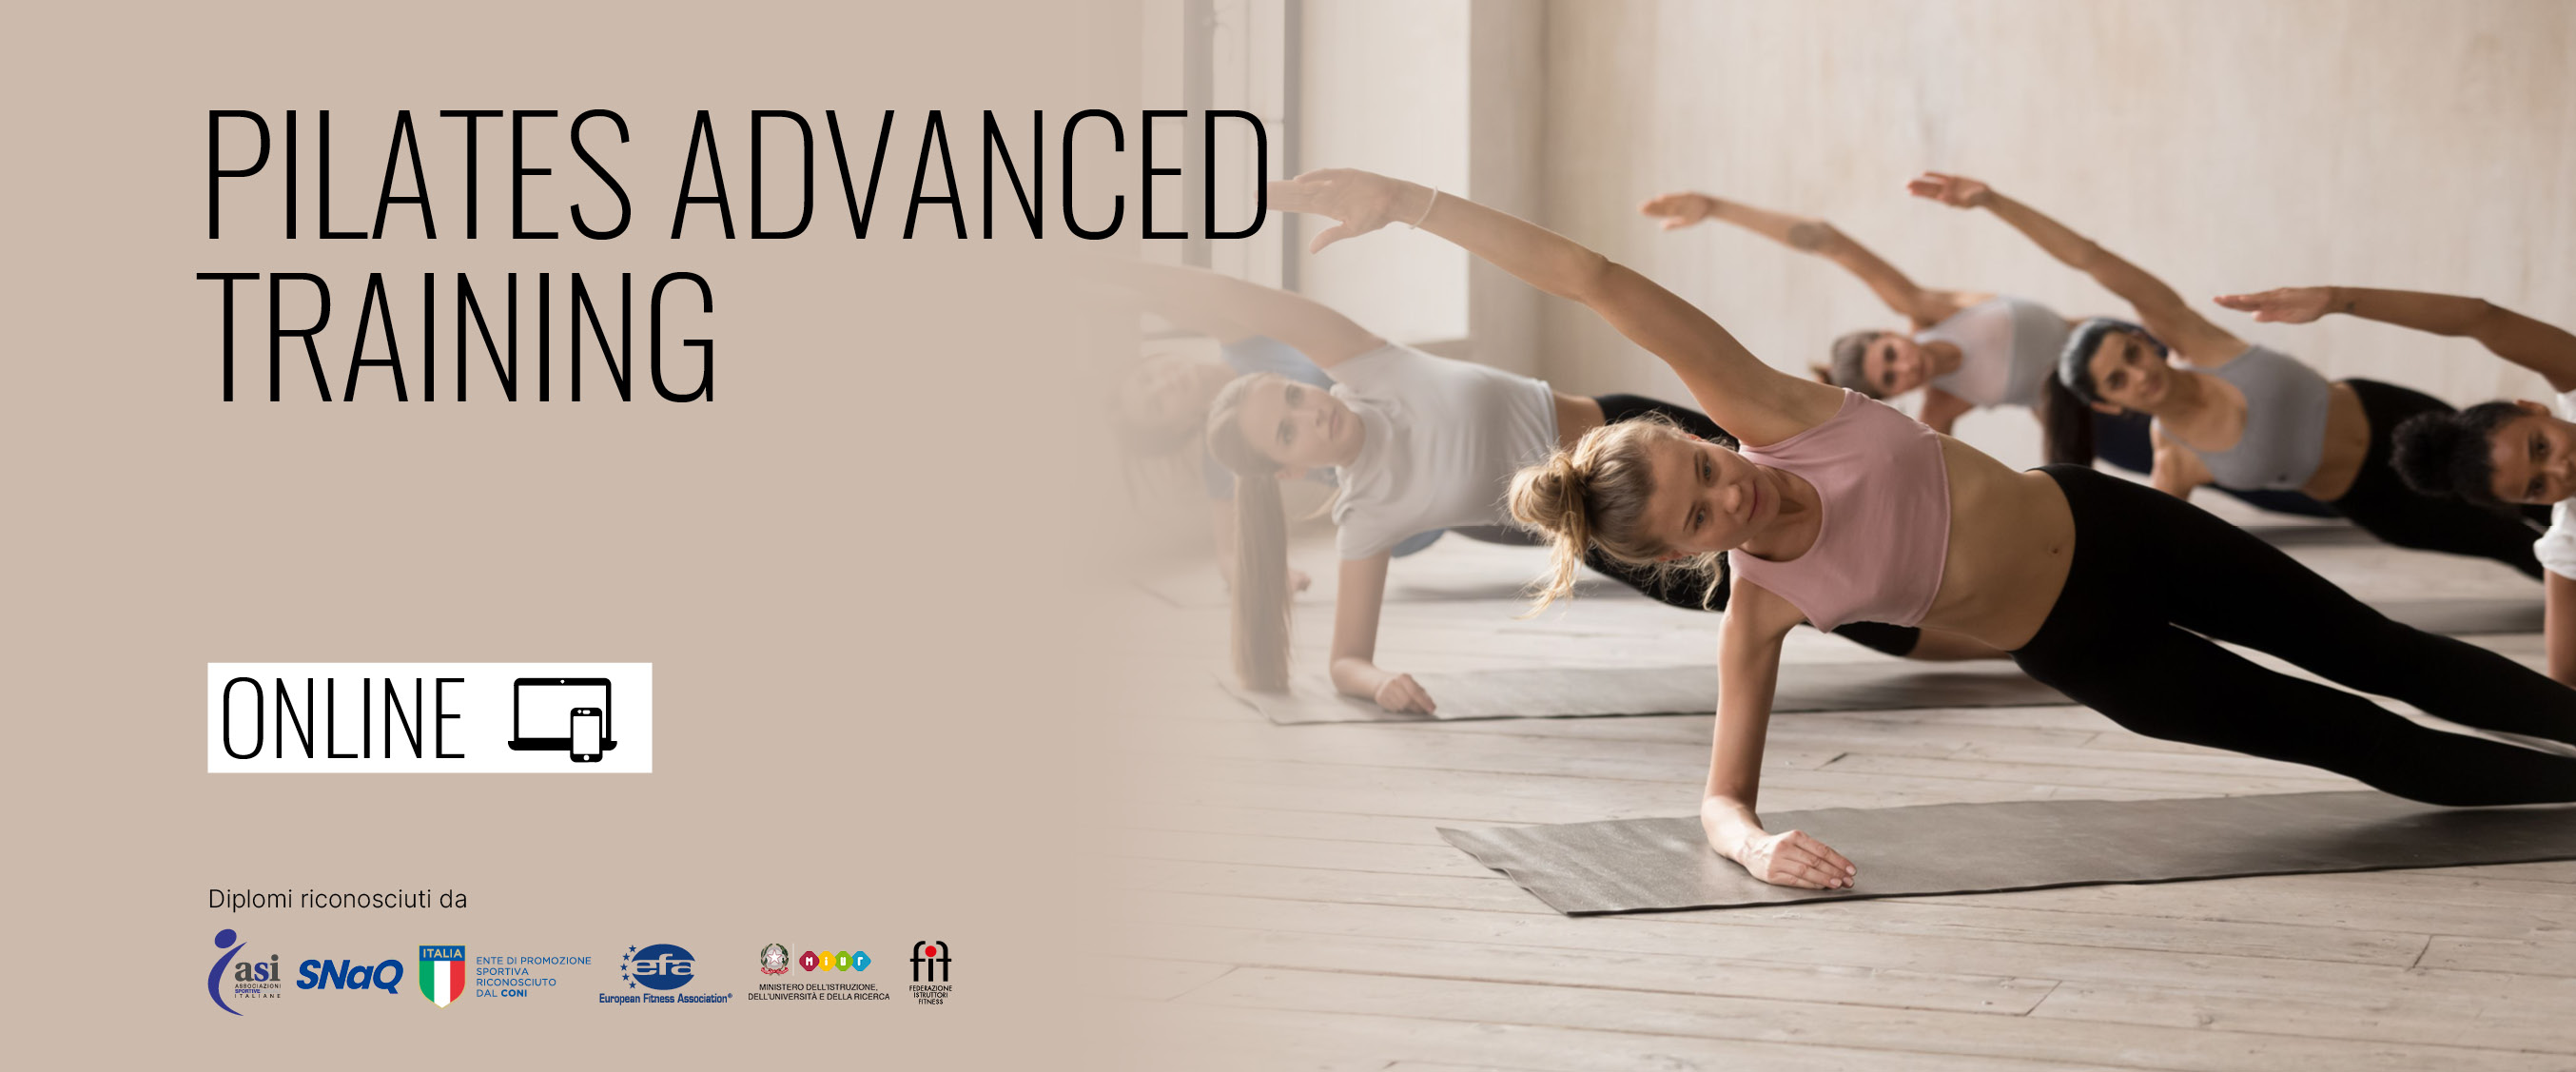 pilates advanced training online